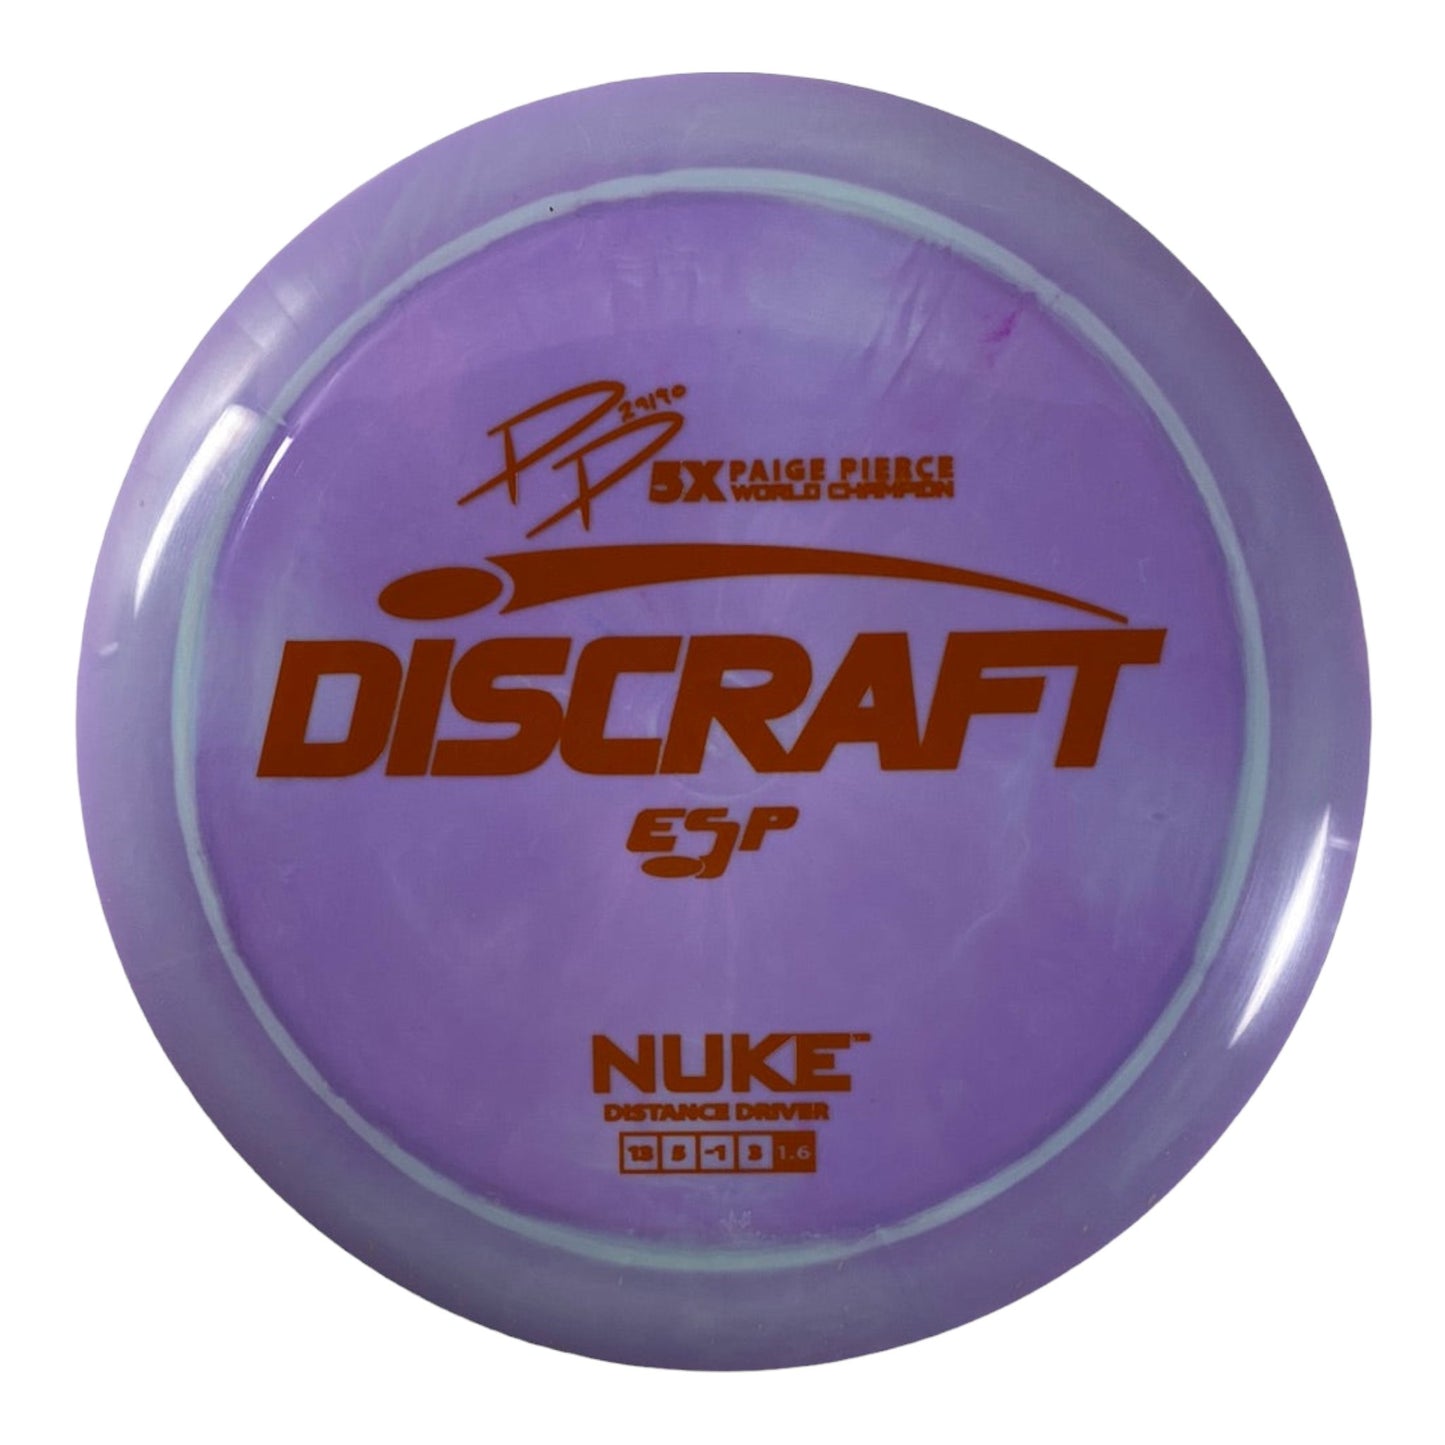 Discraft Nuke | ESP | Purple/Orange 173g (Paige Pierce) Disc Golf